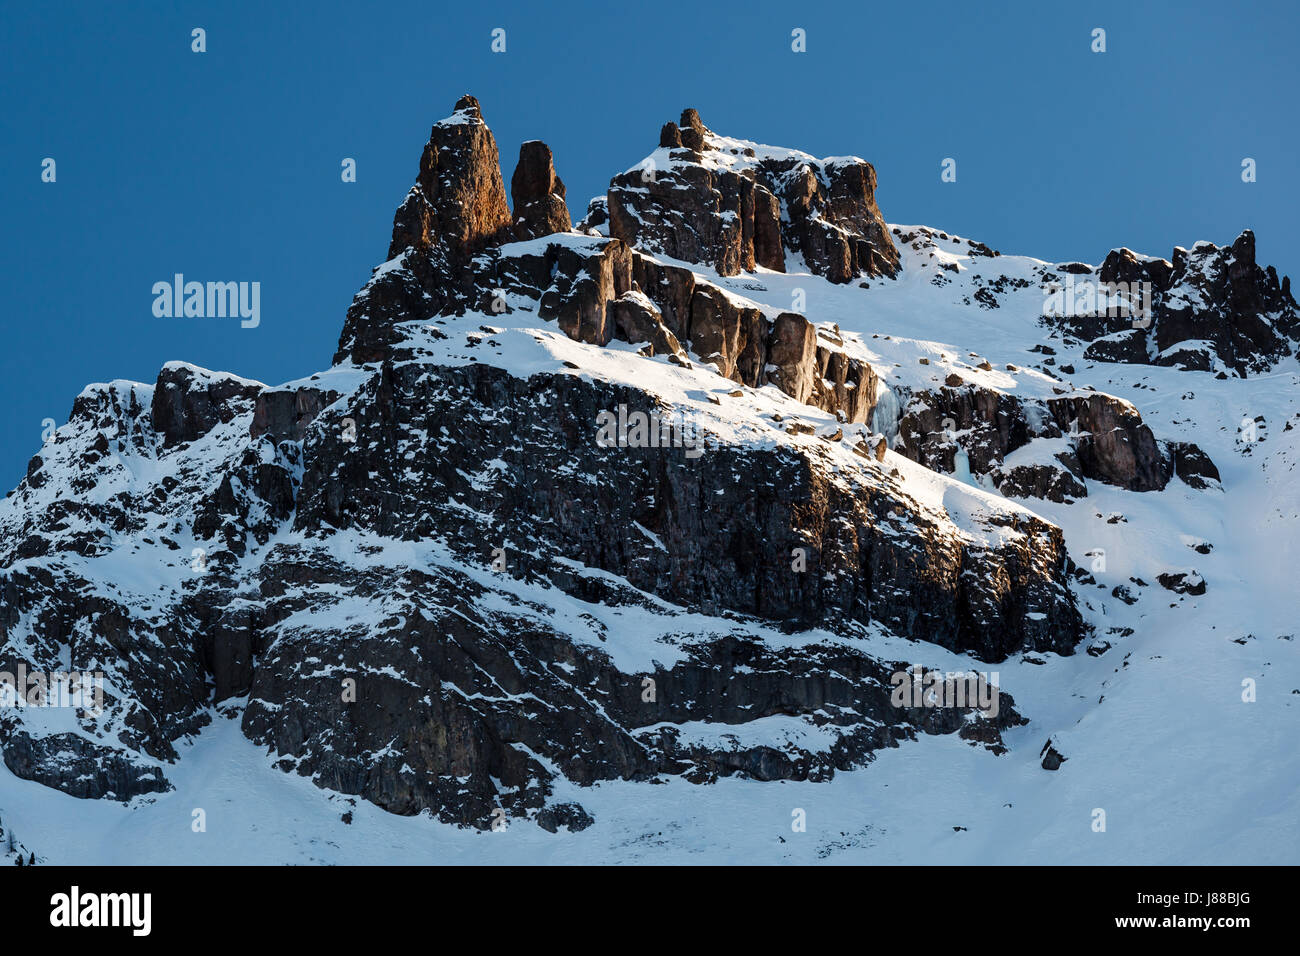 Rocky Mountains auf das Skigebiet Arabba, Dolomiten Alpen Italien Stockfoto